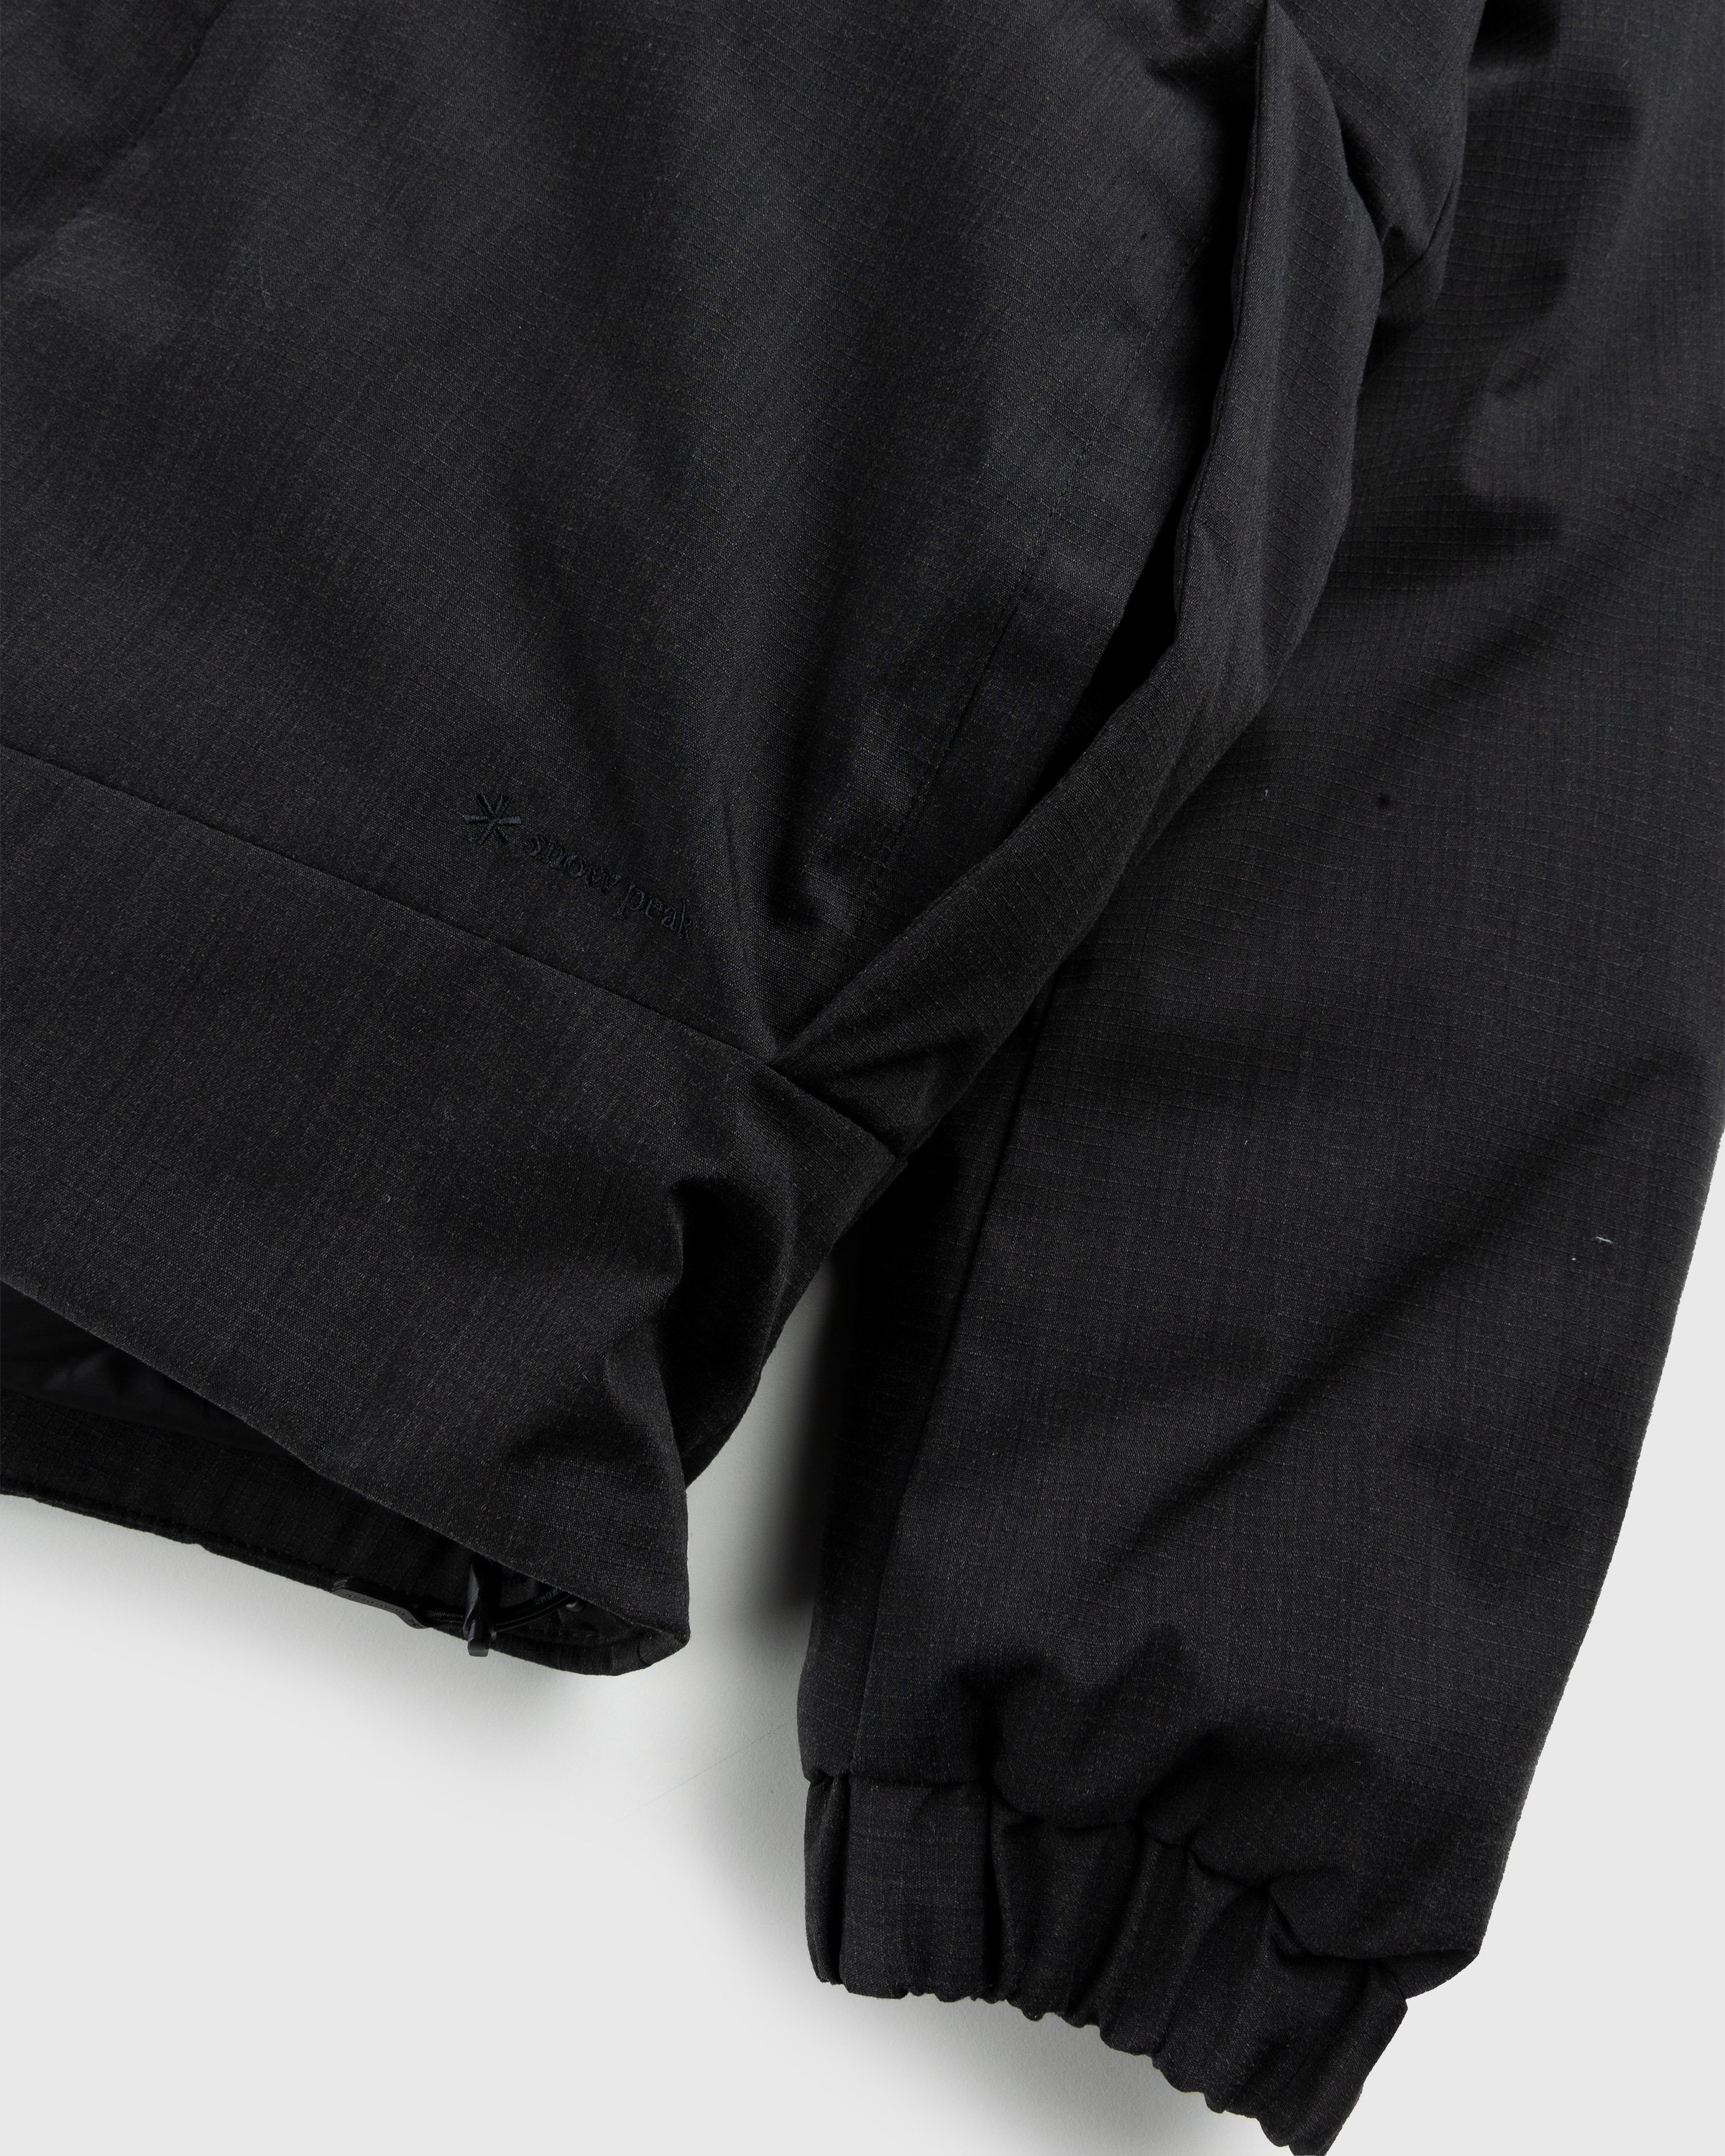 Snow Peak - Fire-Resistant 2 Layer Down Jacket Black - Clothing - Black - Image 4